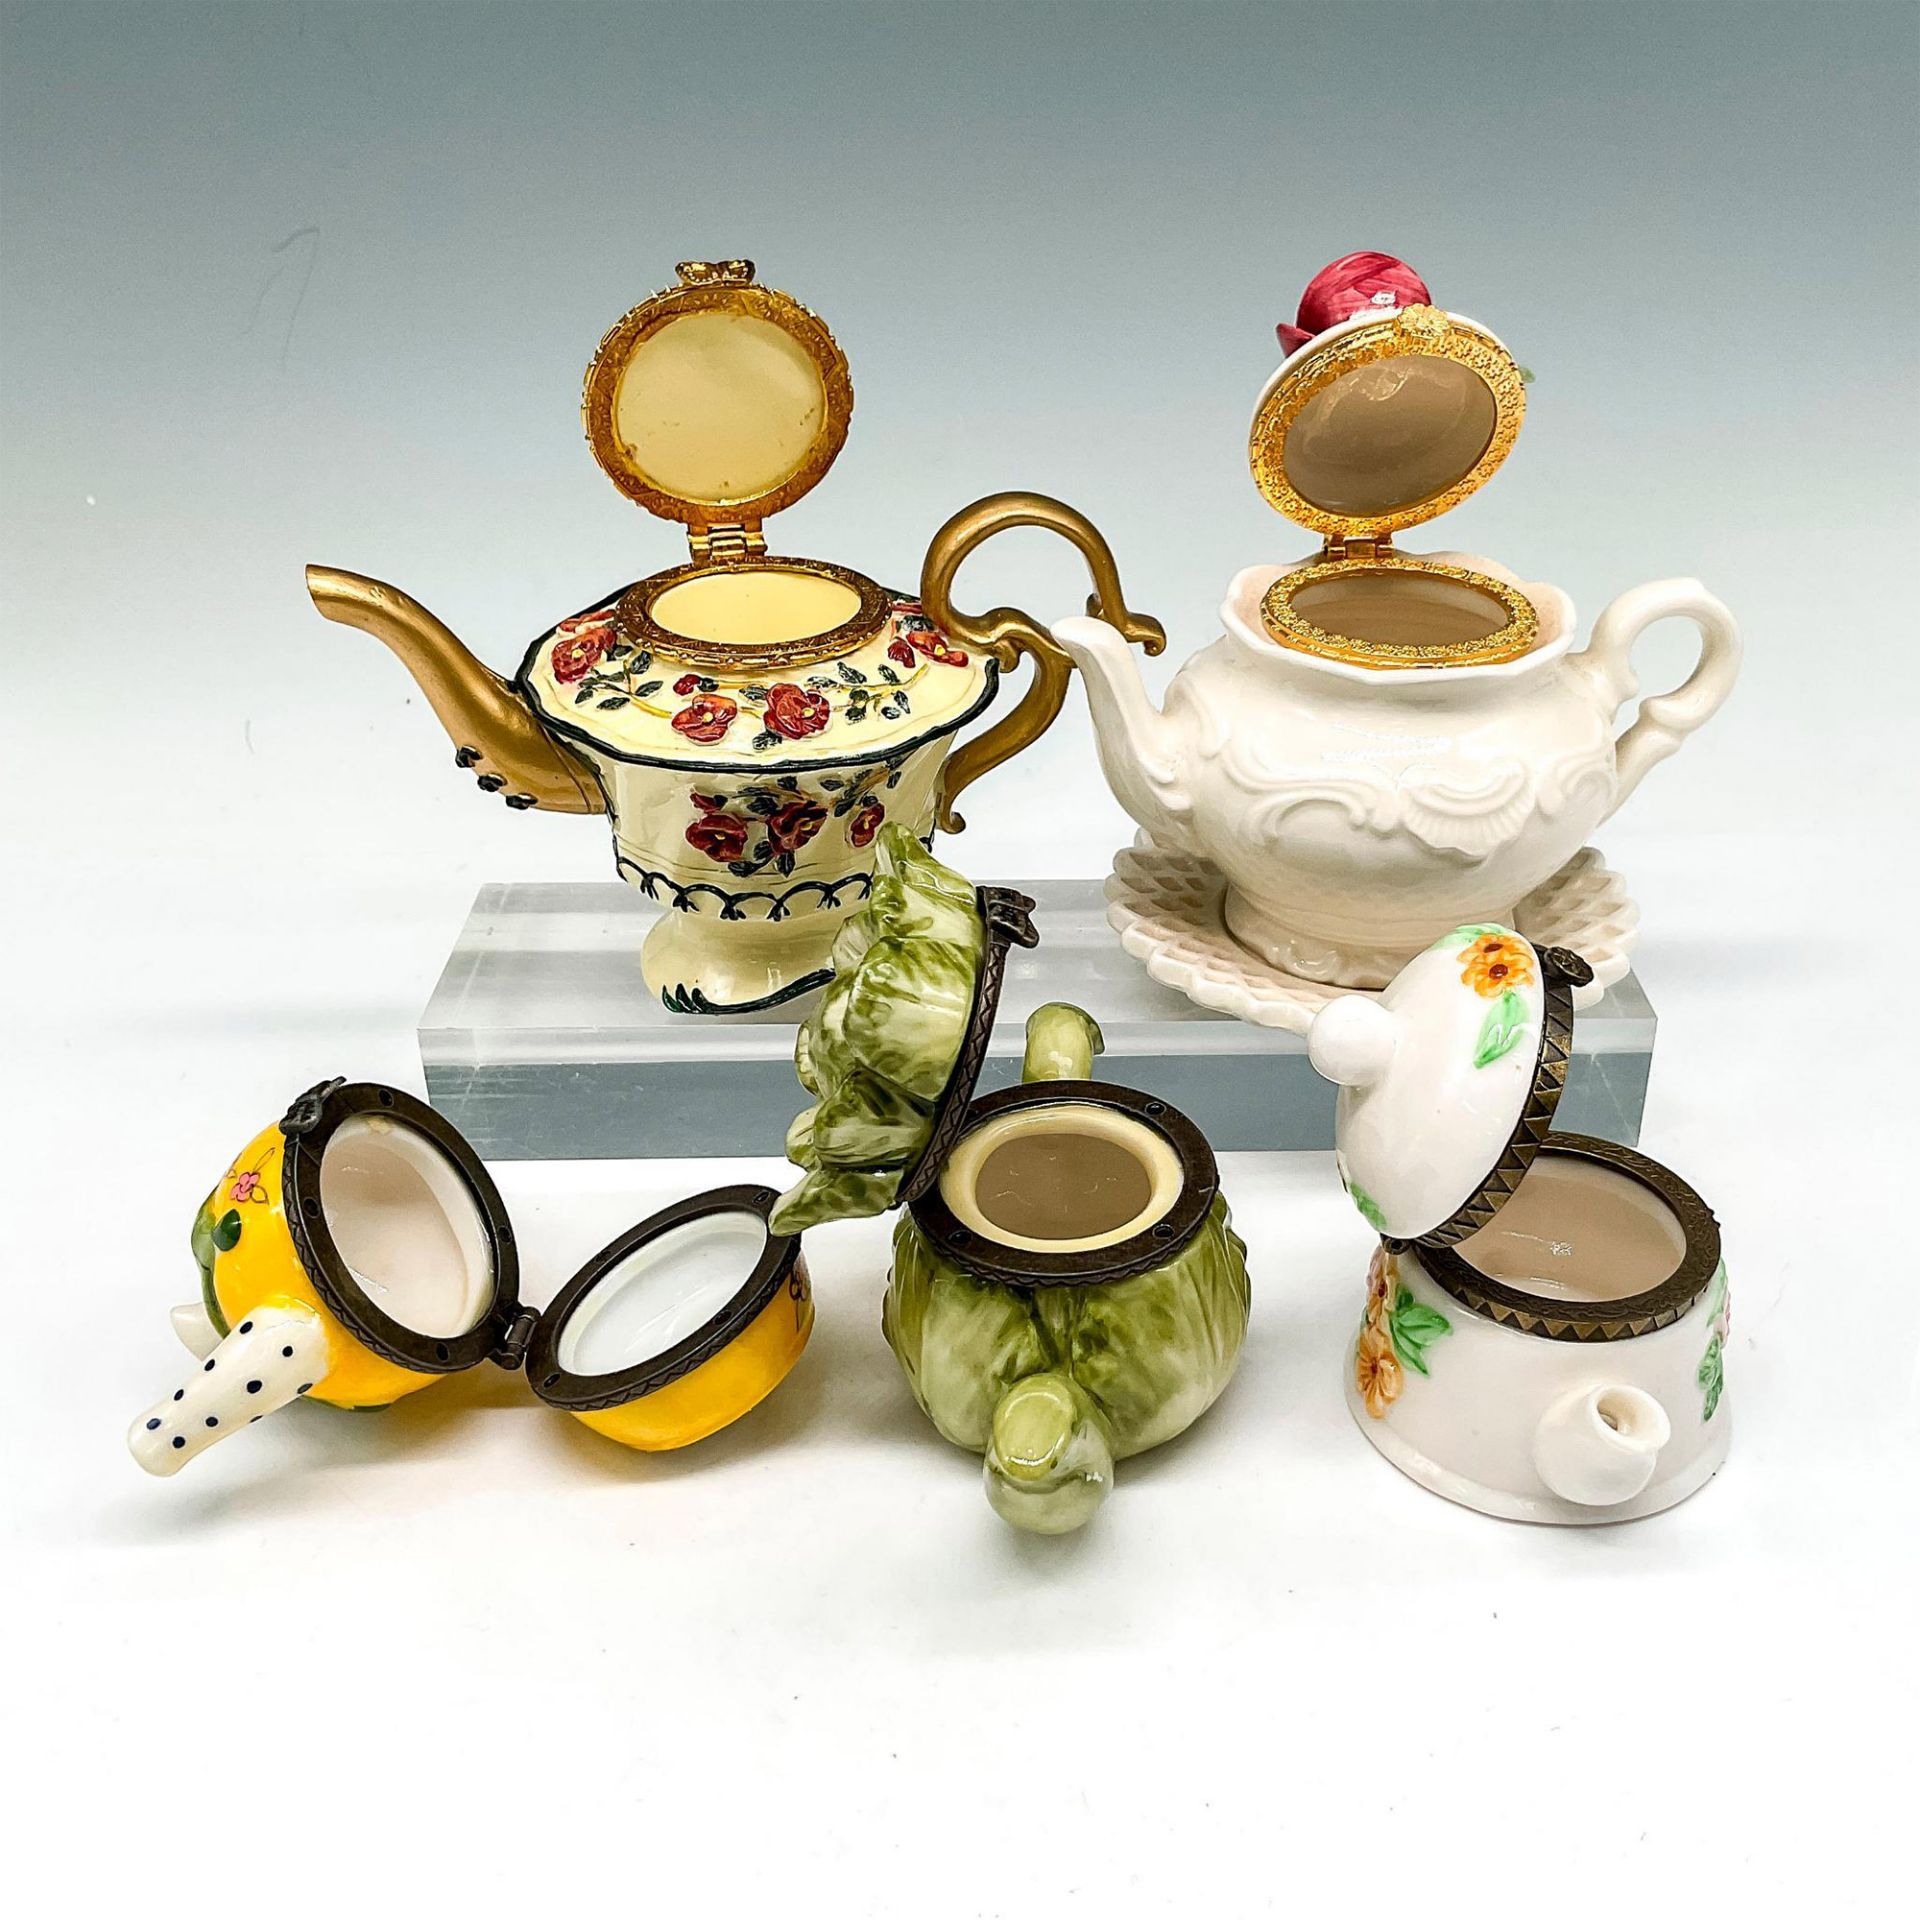 5pc Vintage Collectible Miniature Teapot Boxes - Image 2 of 3